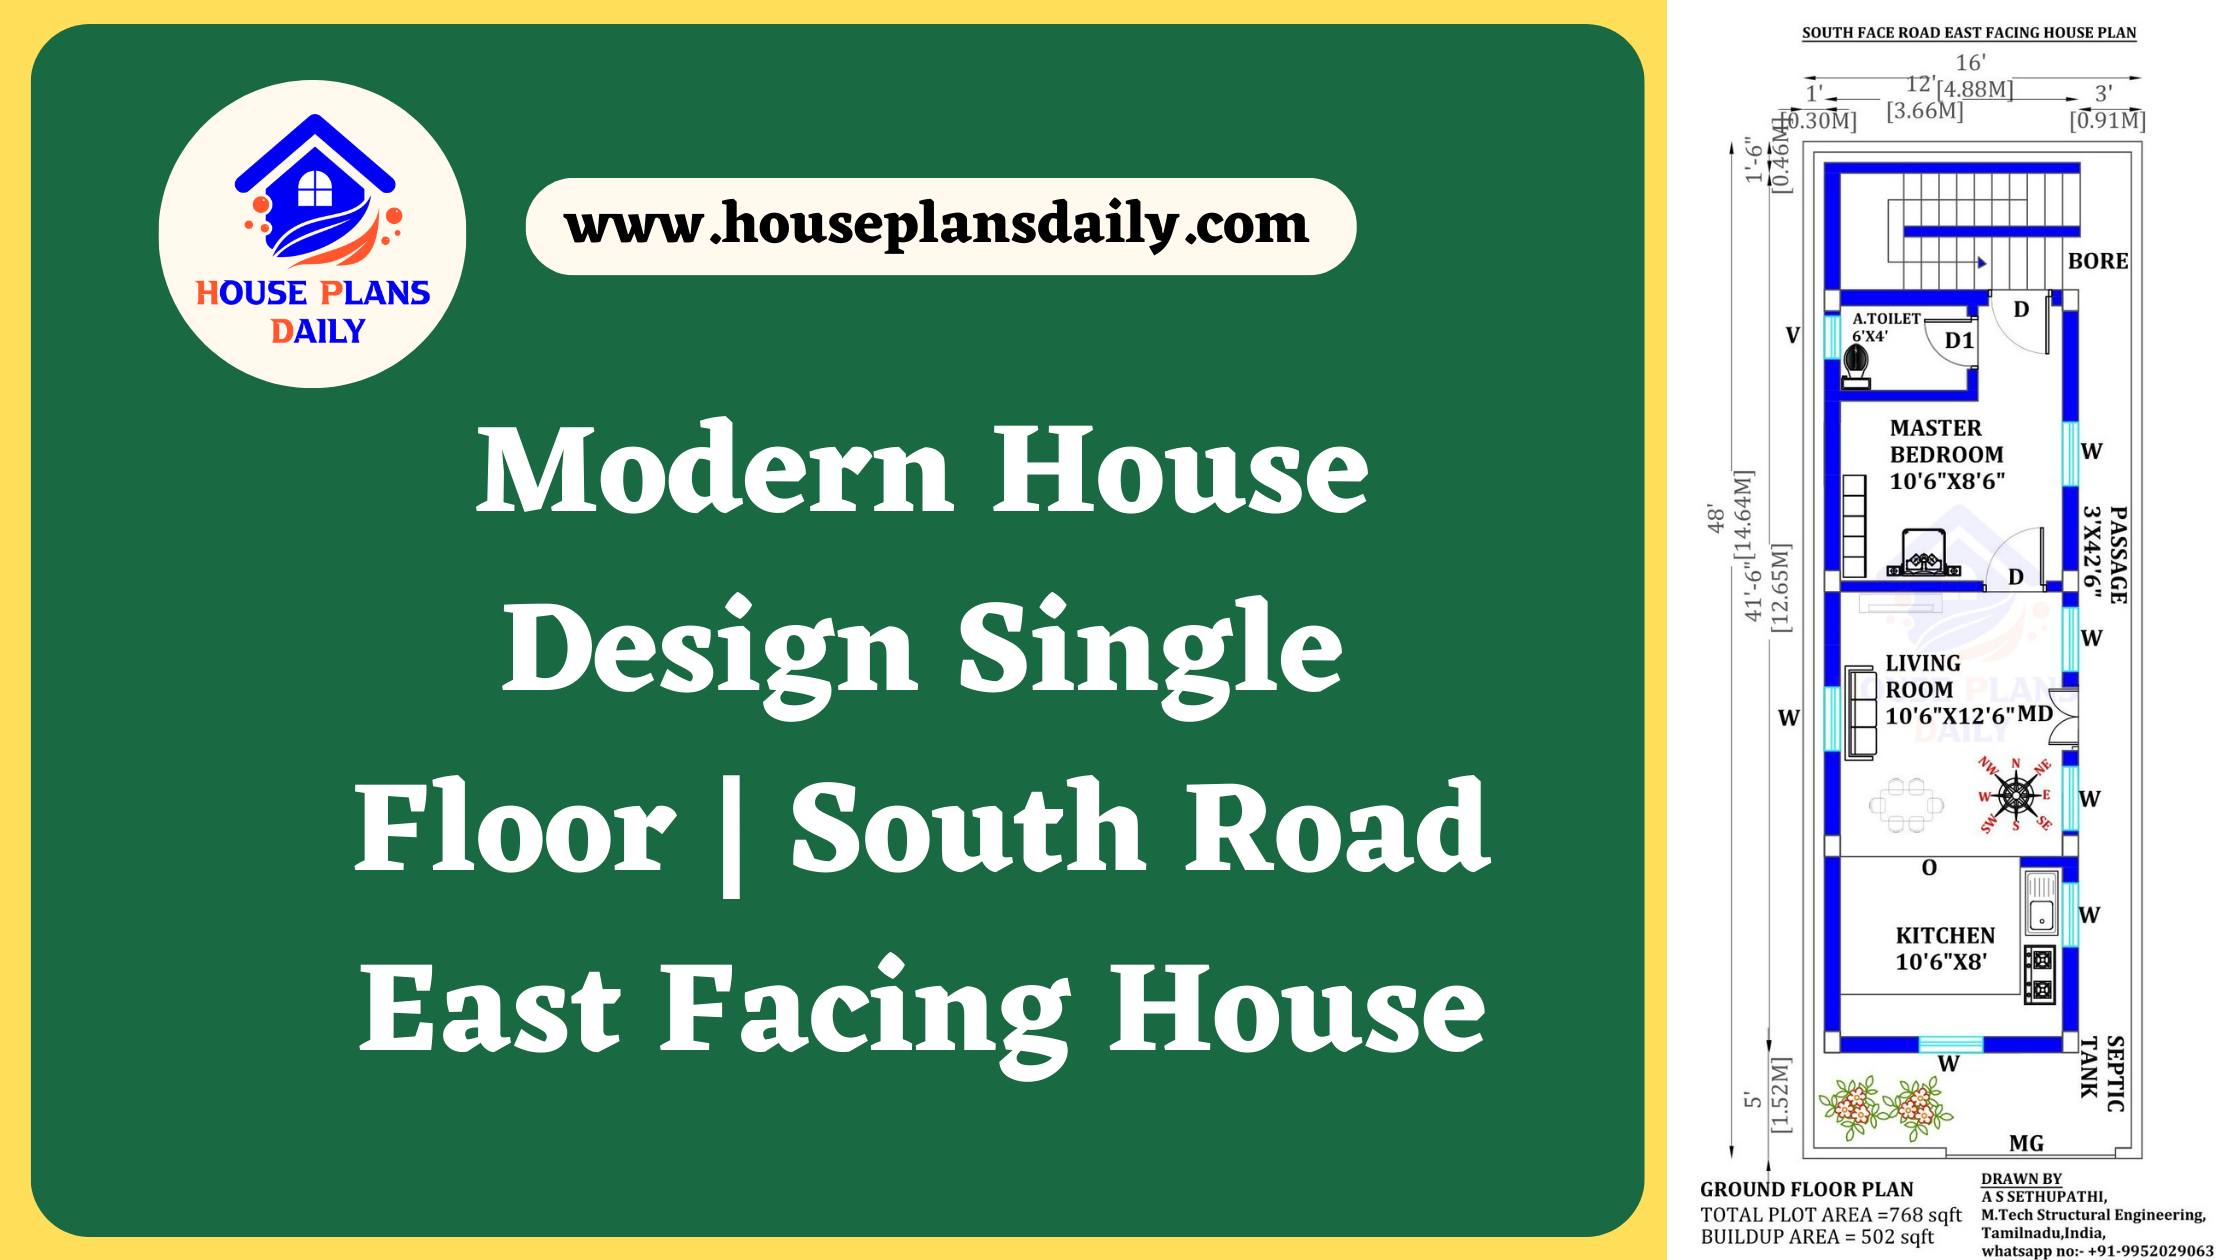 Modern House Design Single Floor | South Road East Facing House